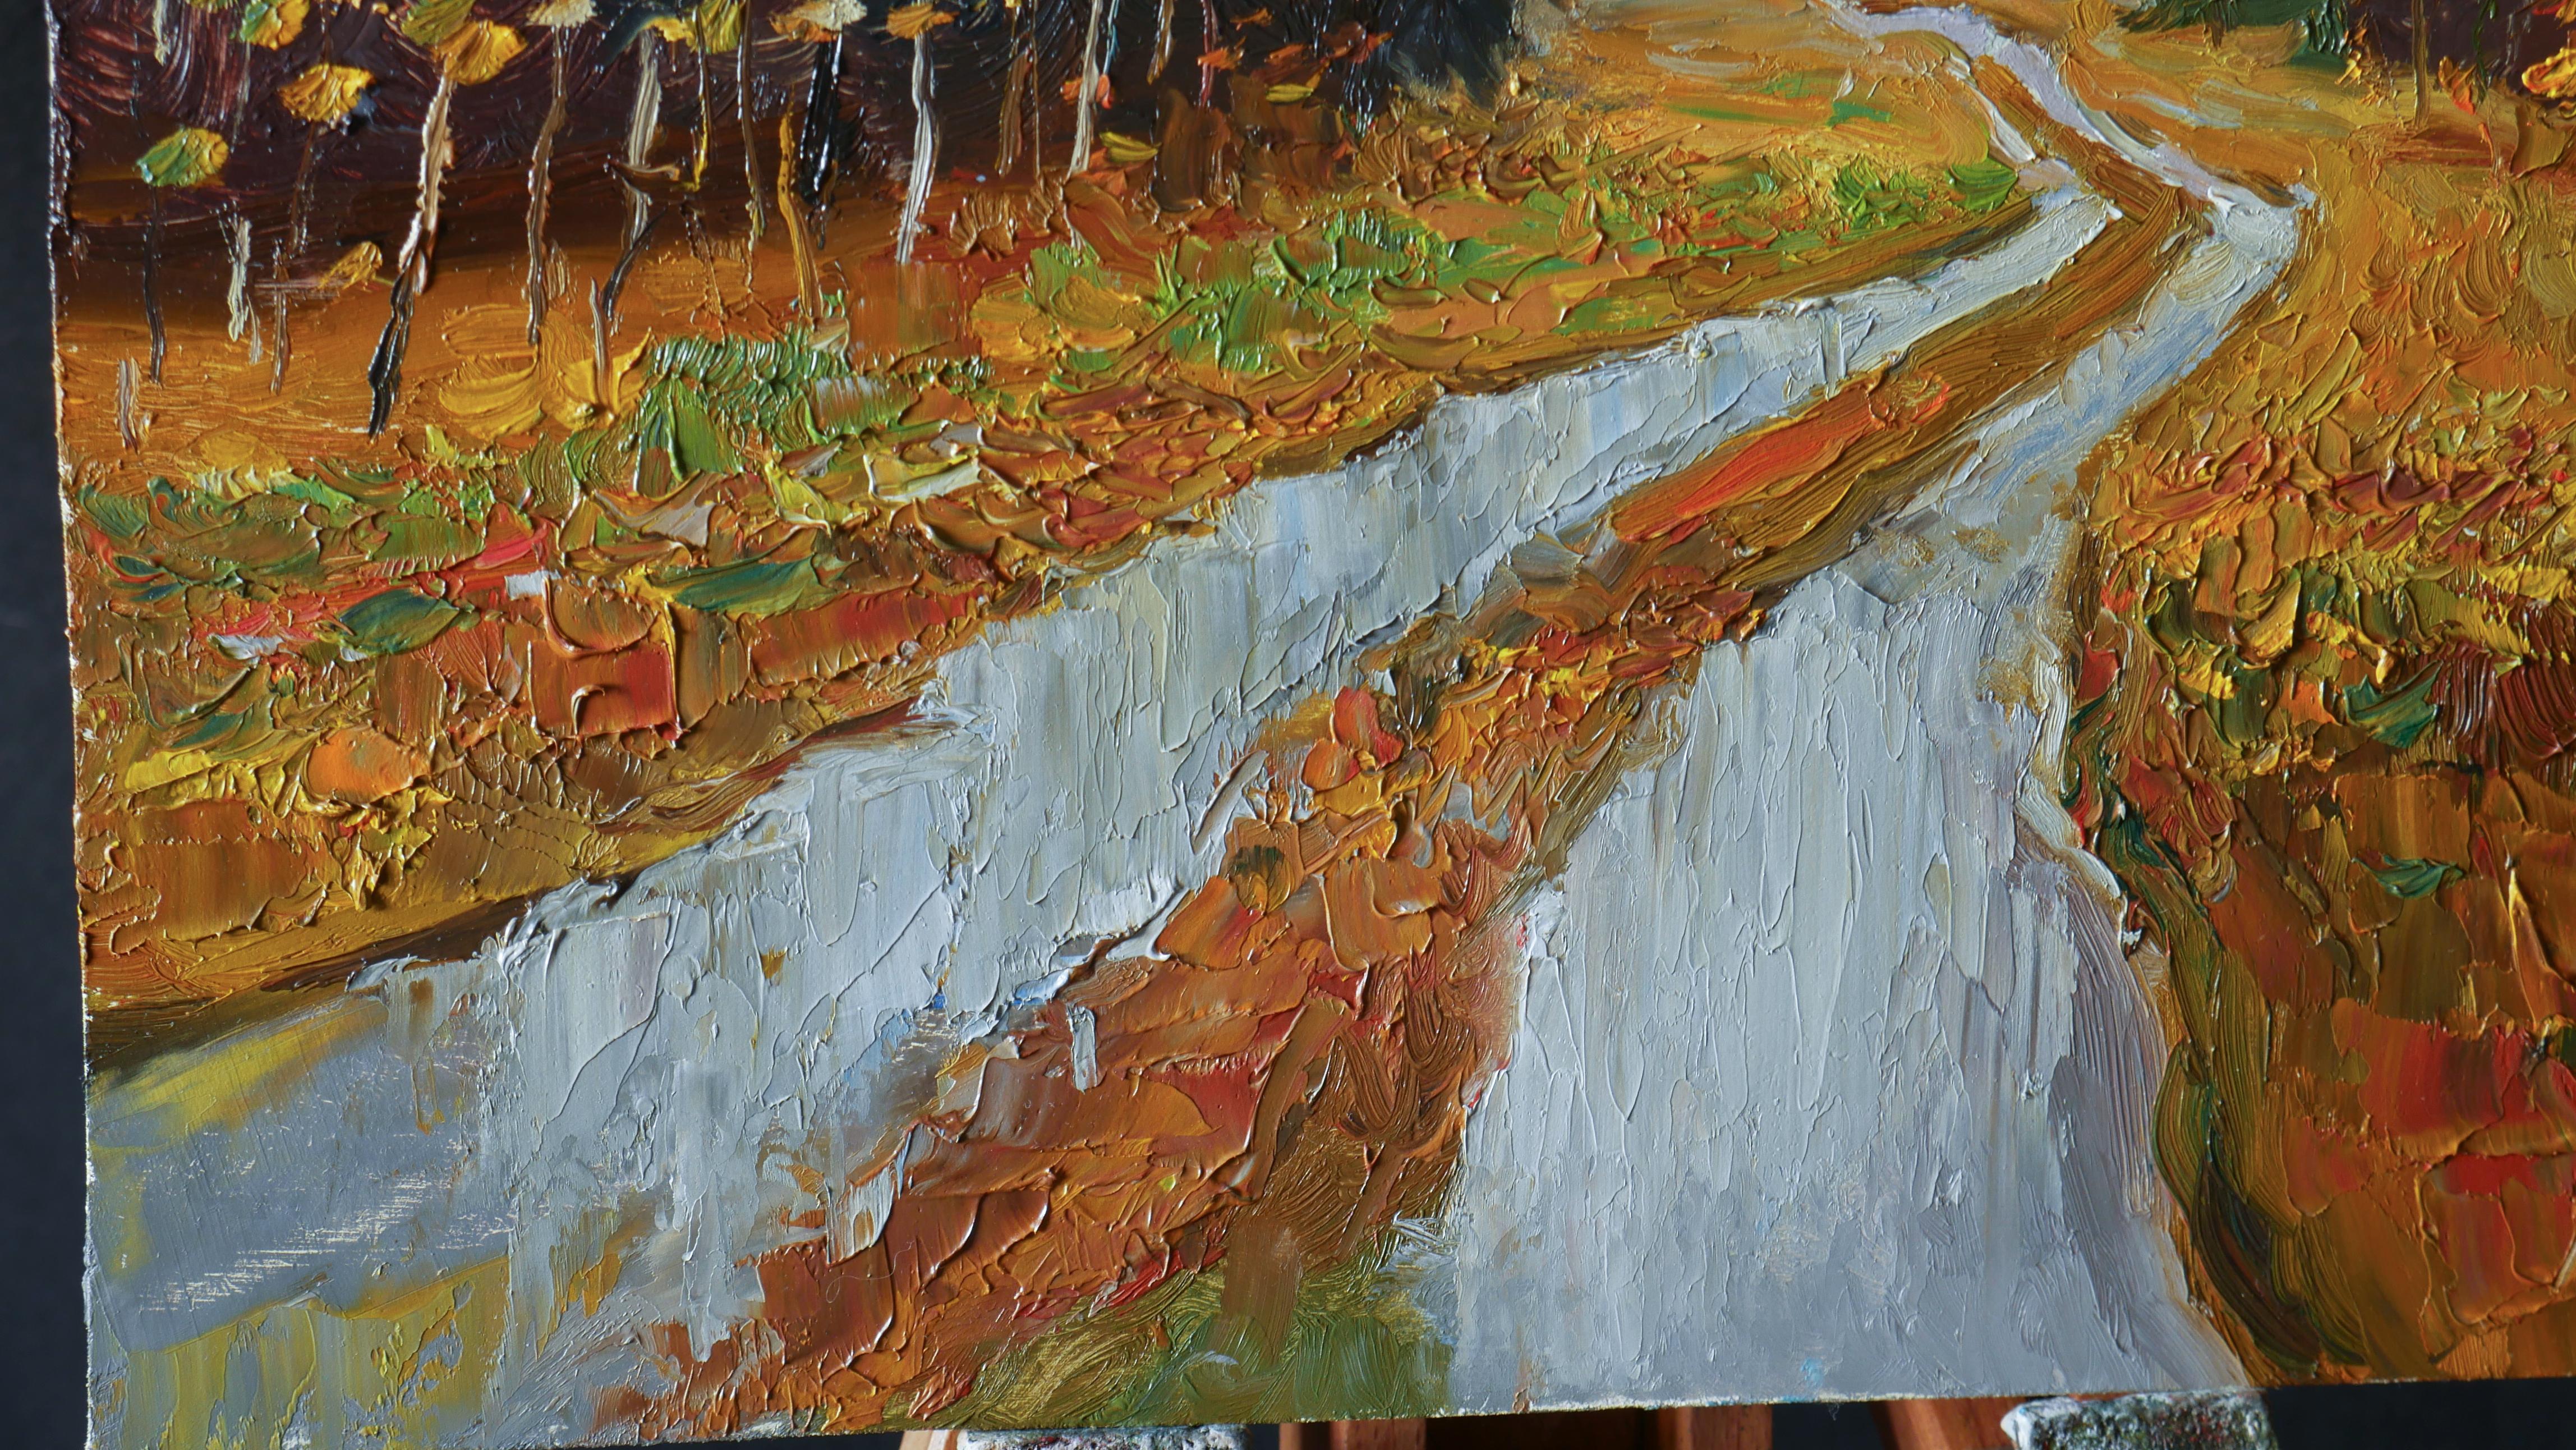 Across The Autumn Forest - autumn landscape painting For Sale 3